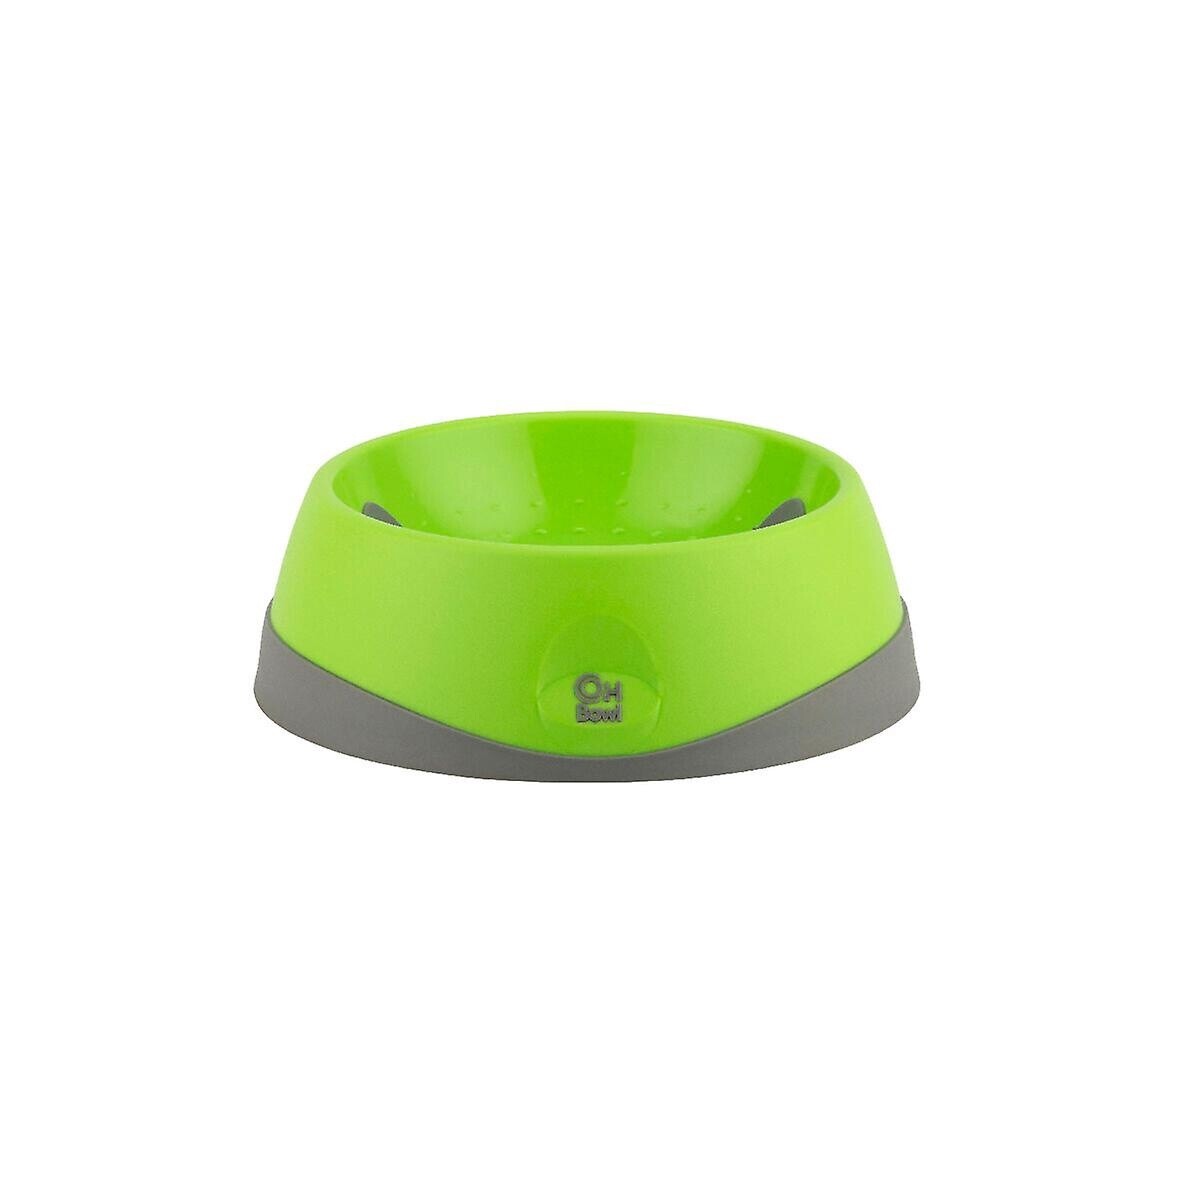 LickiMat - Oh Bowl - Medium, Colour: Green